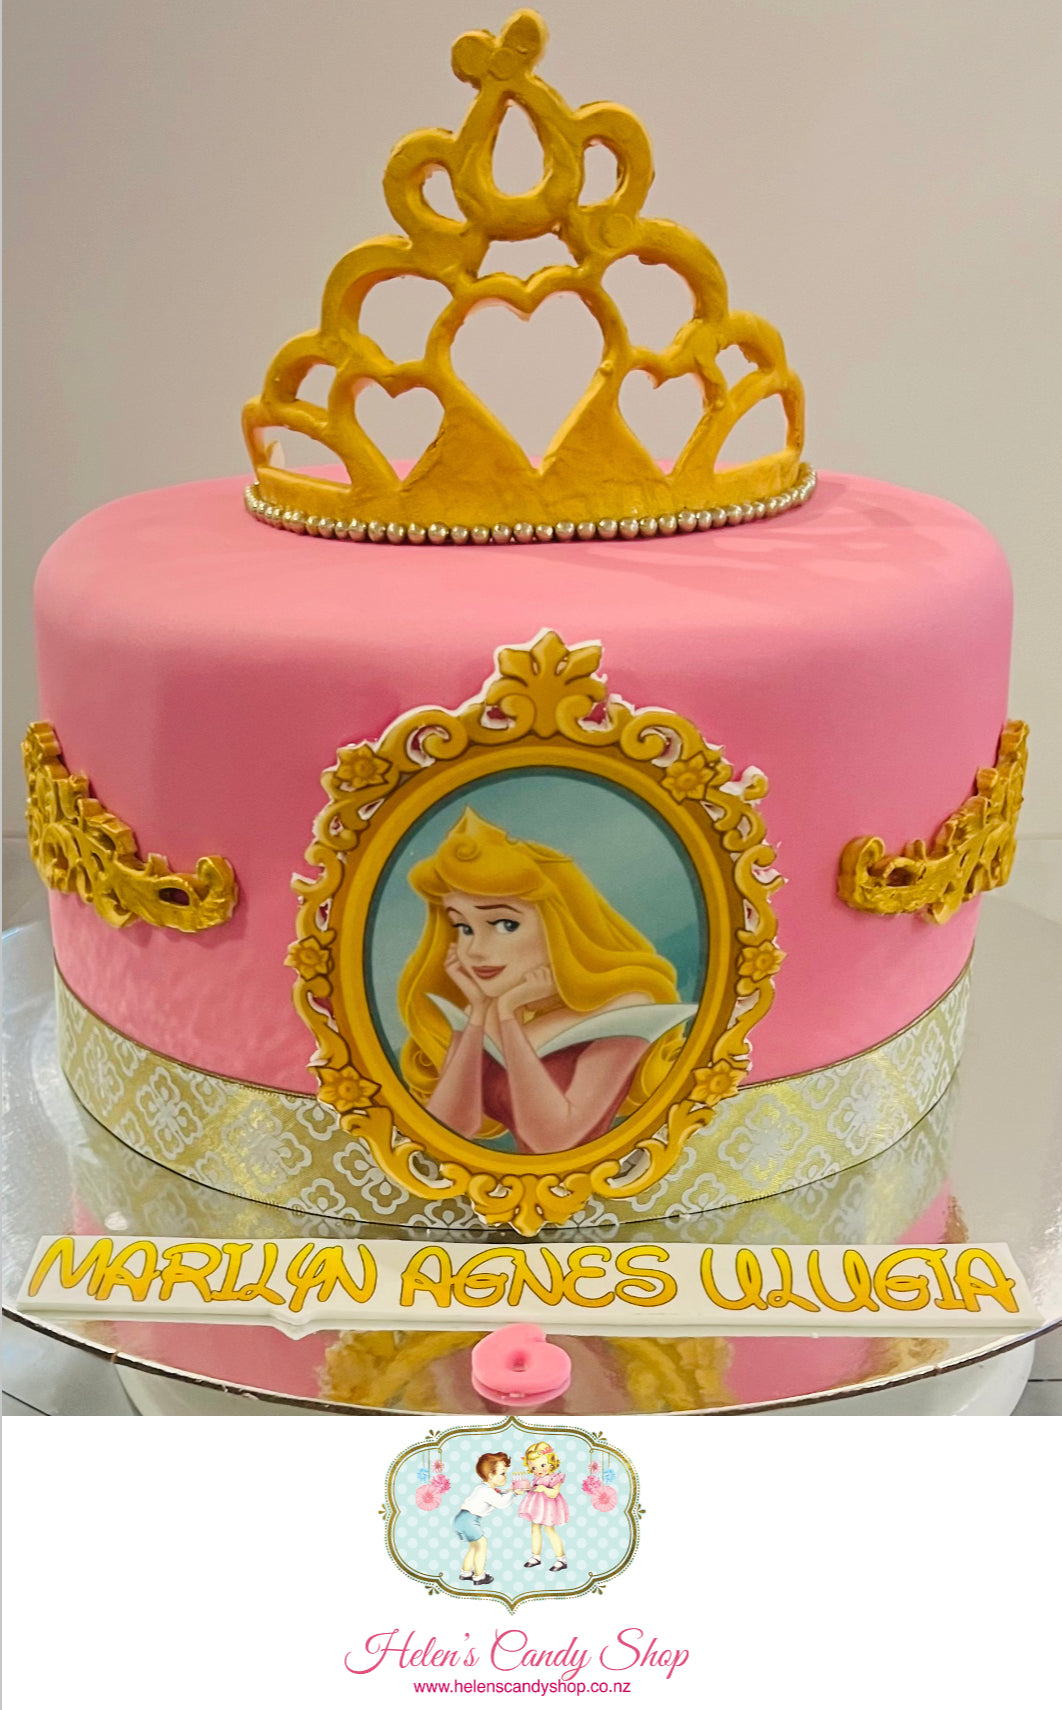 Princess Themed Celebration Cake